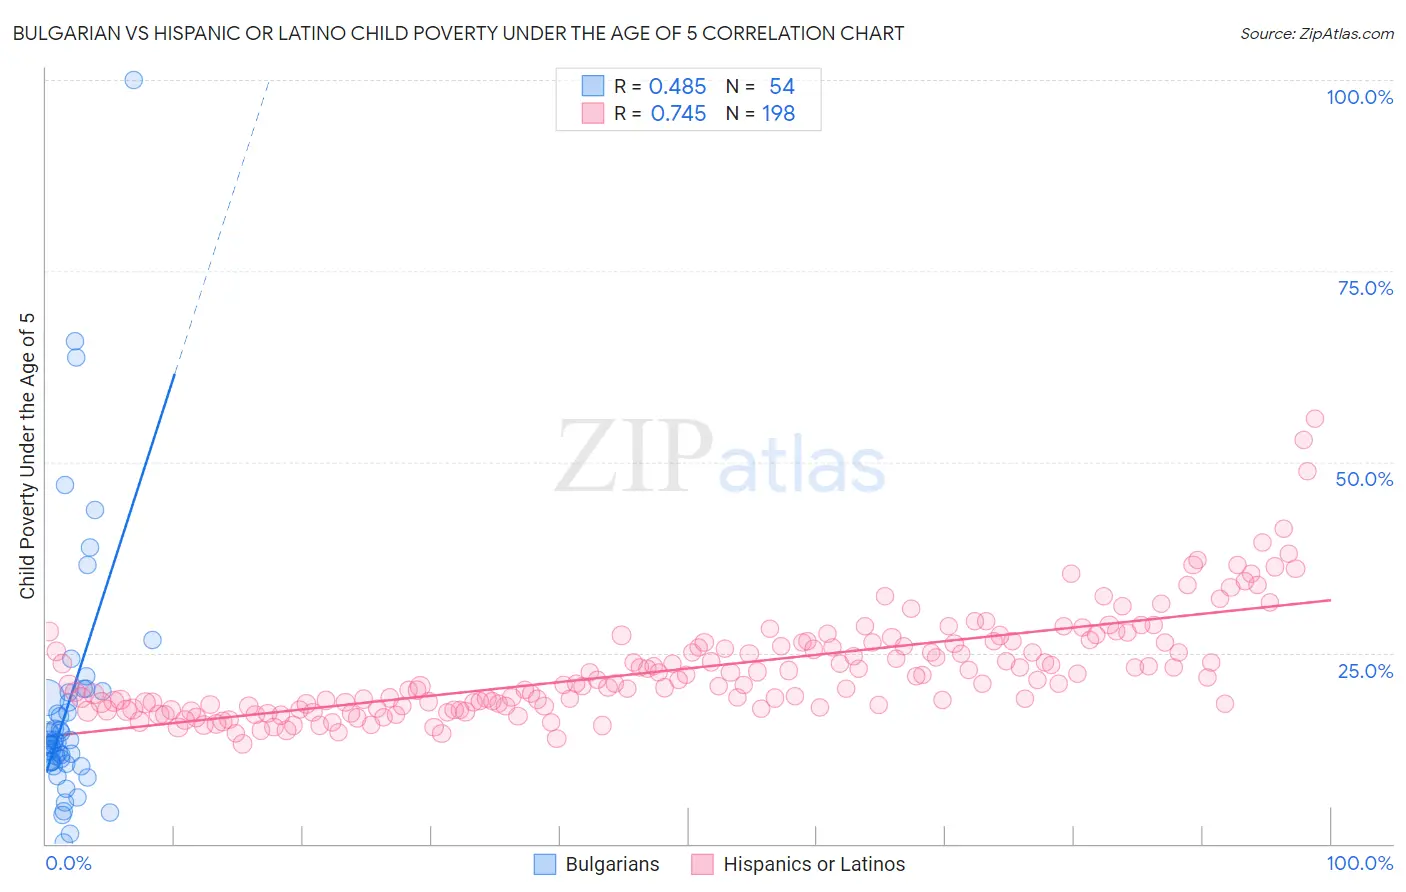 Bulgarian vs Hispanic or Latino Child Poverty Under the Age of 5